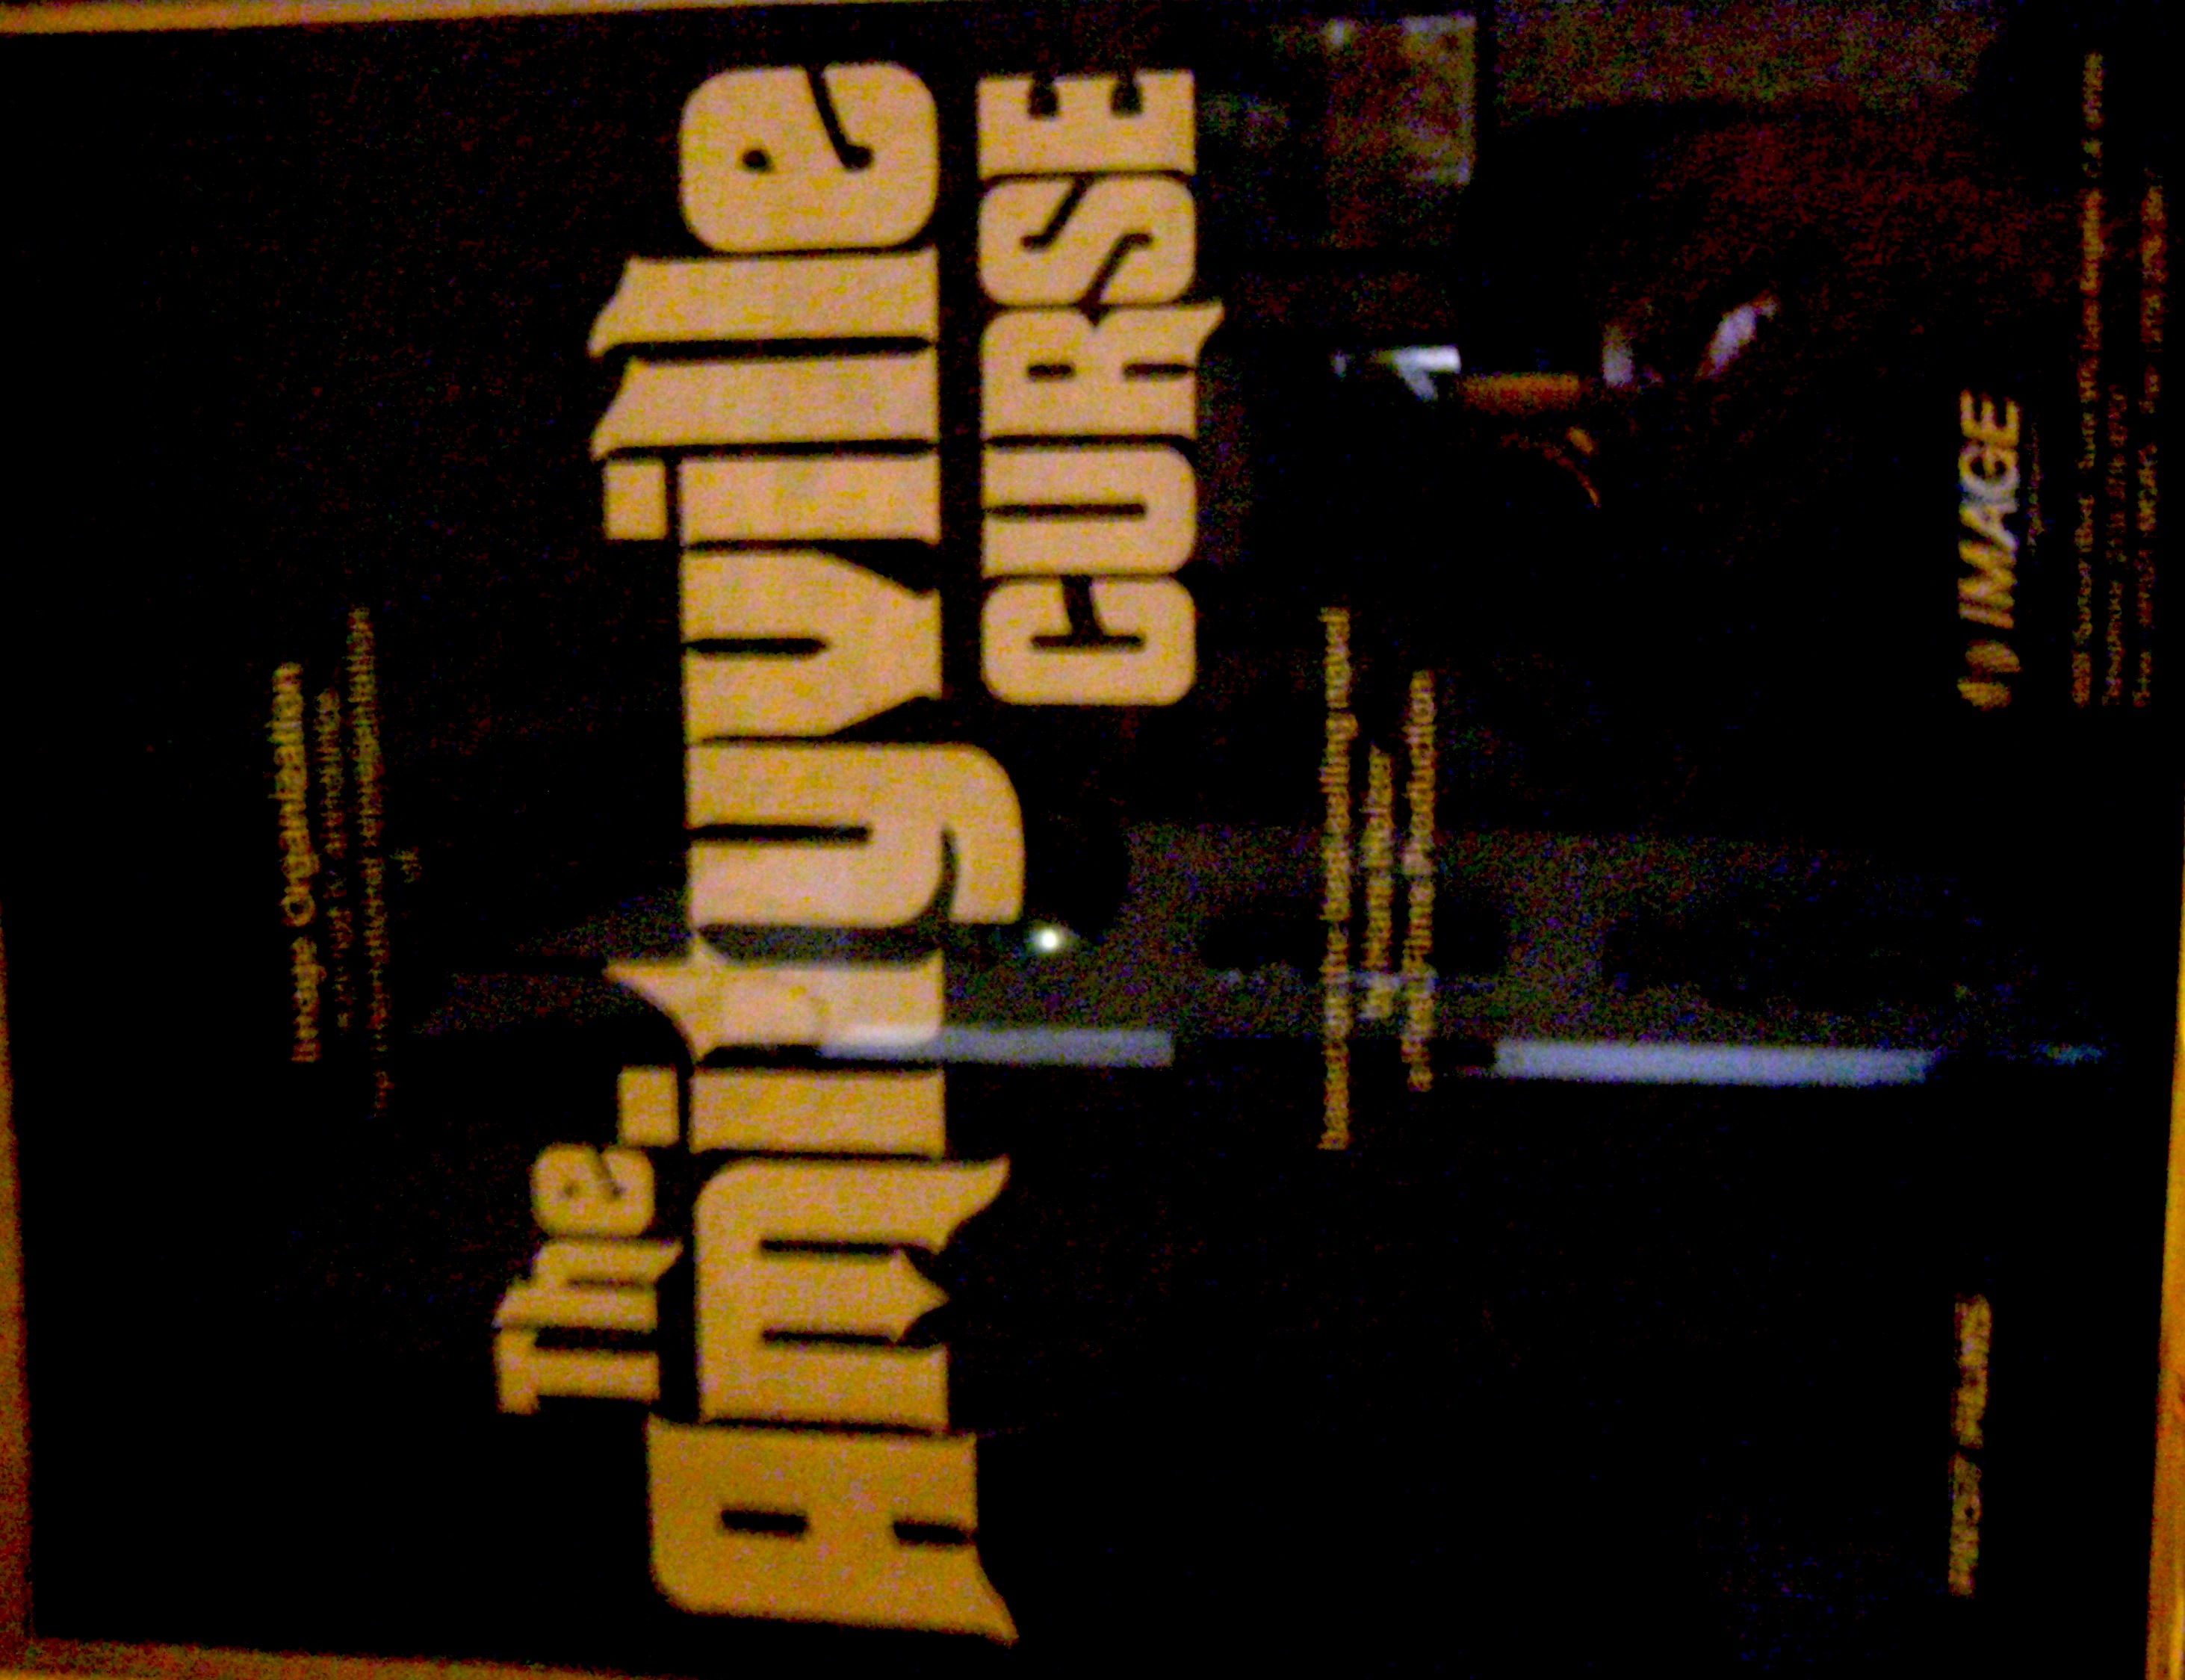 The Amityville Curse-Bestseller novel poster.